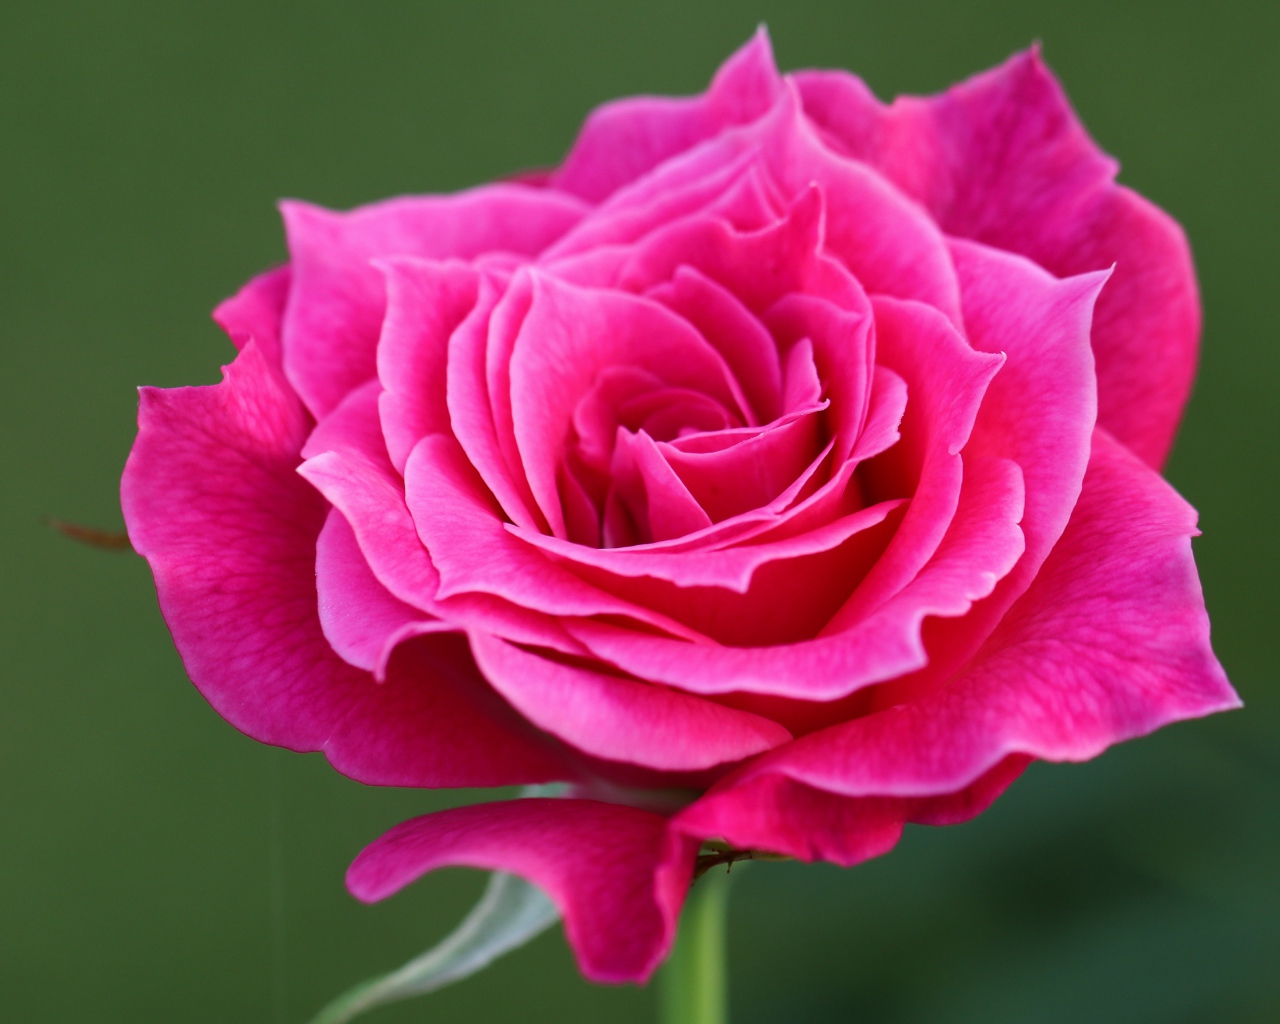 Нежная садовая розовая роза крупным планом на зеленом фоне